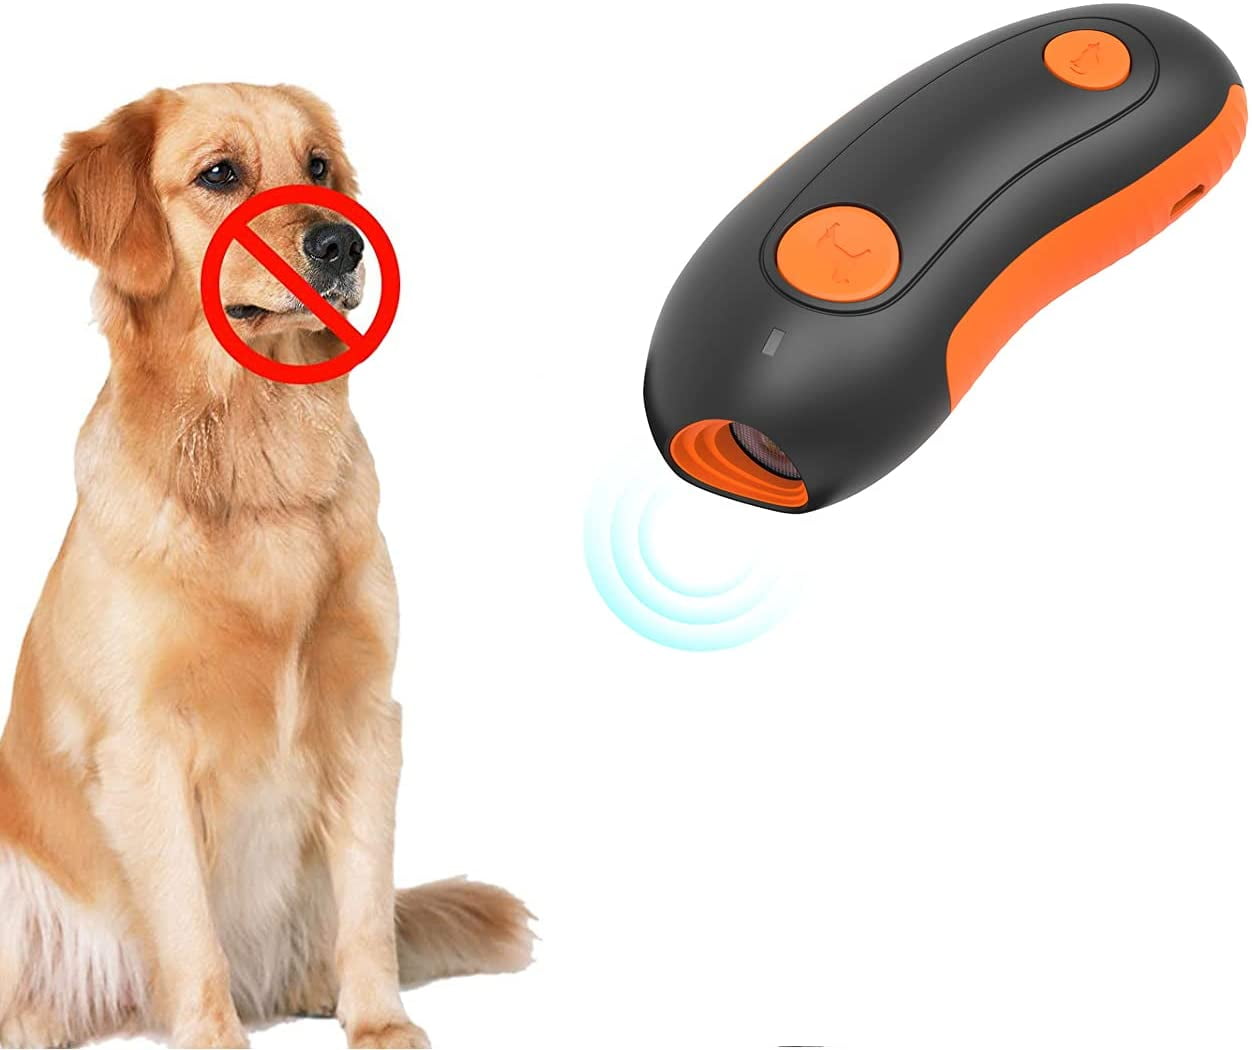 Dog Barking Deterrent Device, Portable Rechargeable Ultrasonic Anti Barking  Dog Training Tool, Bark Control Devices, Orange & Black 